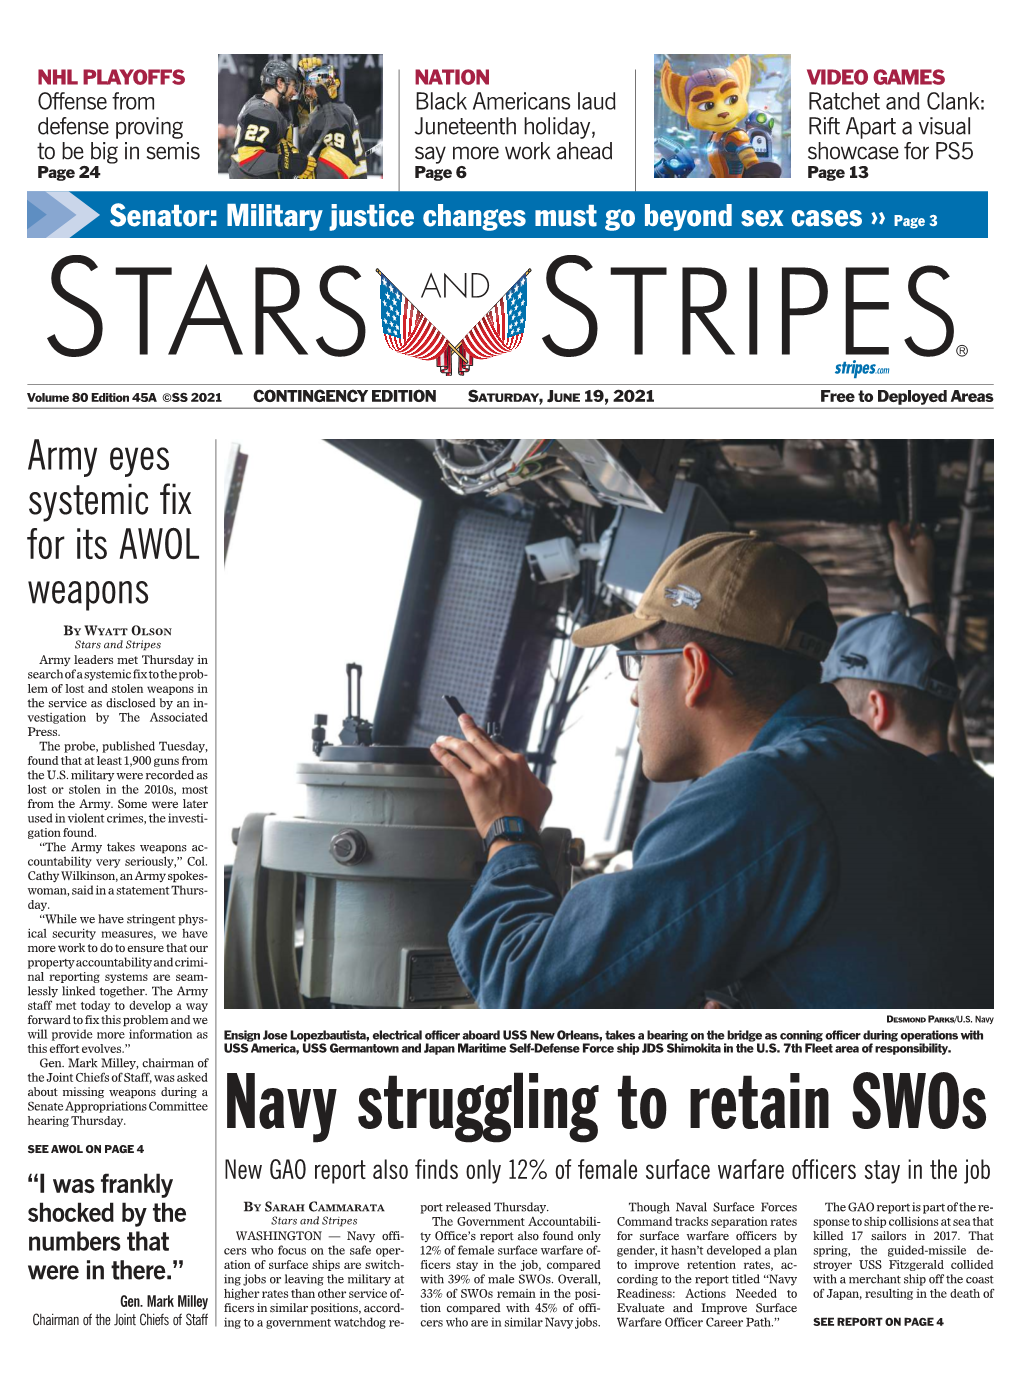 Navy Struggling to Retain Swos